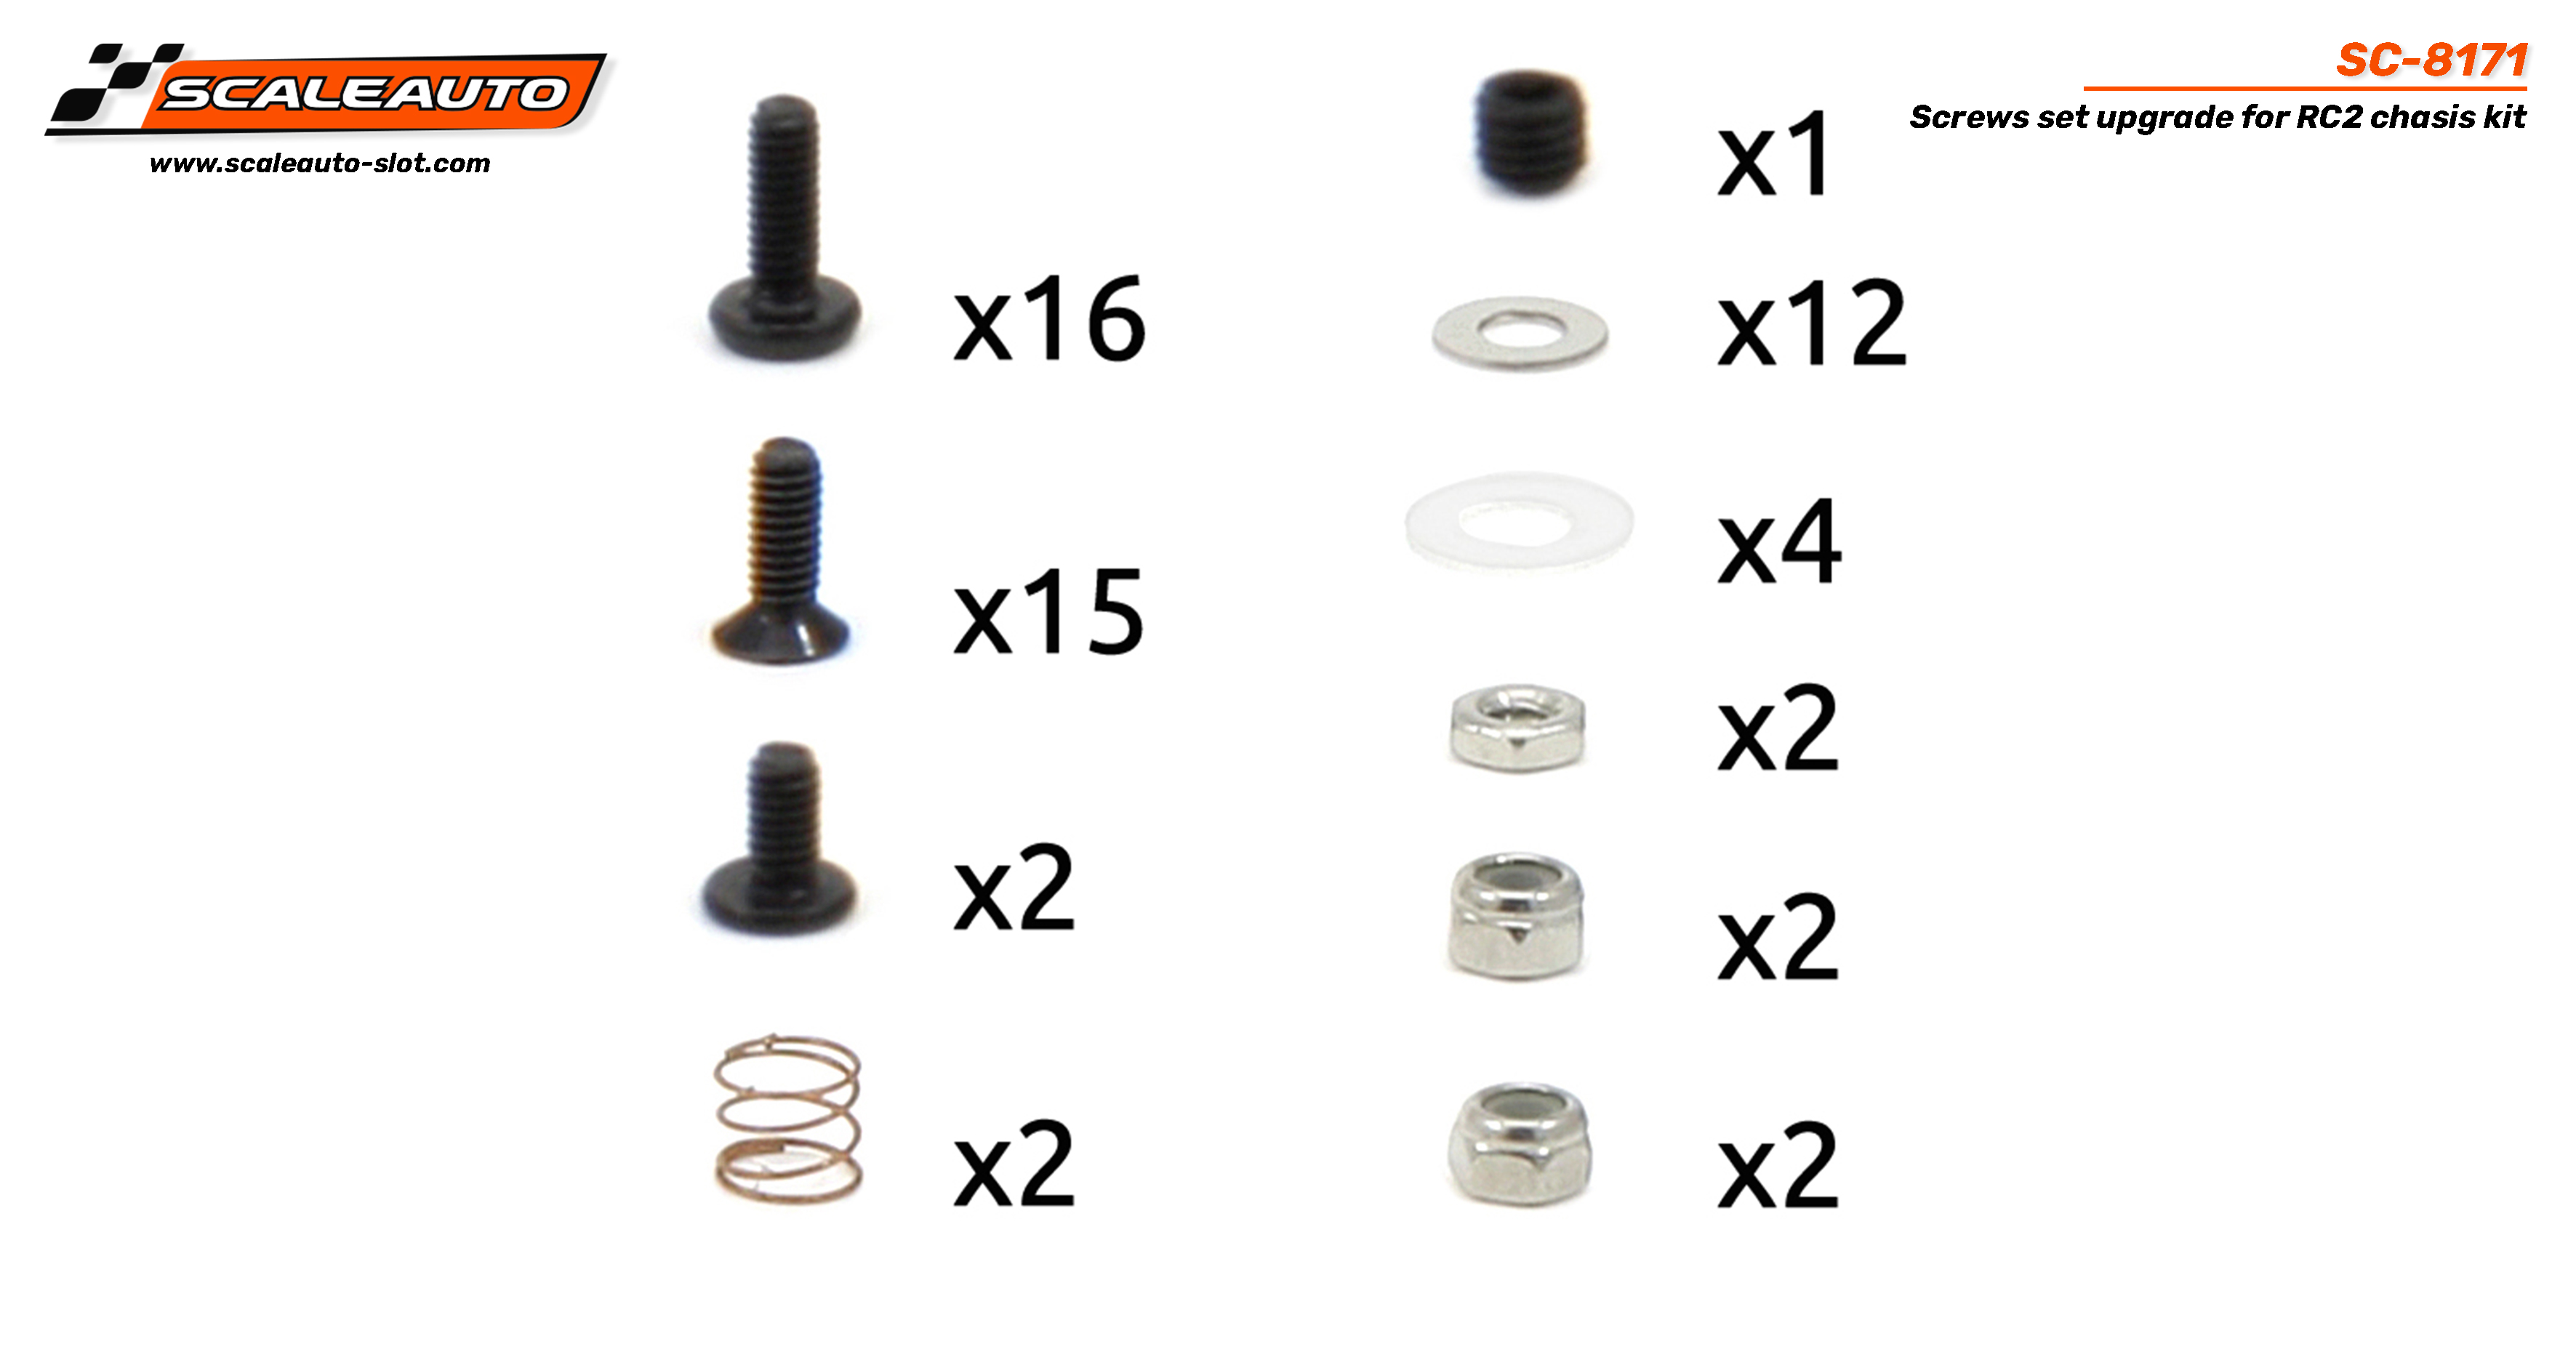 SC-8171 Rc2 upgradeset screws